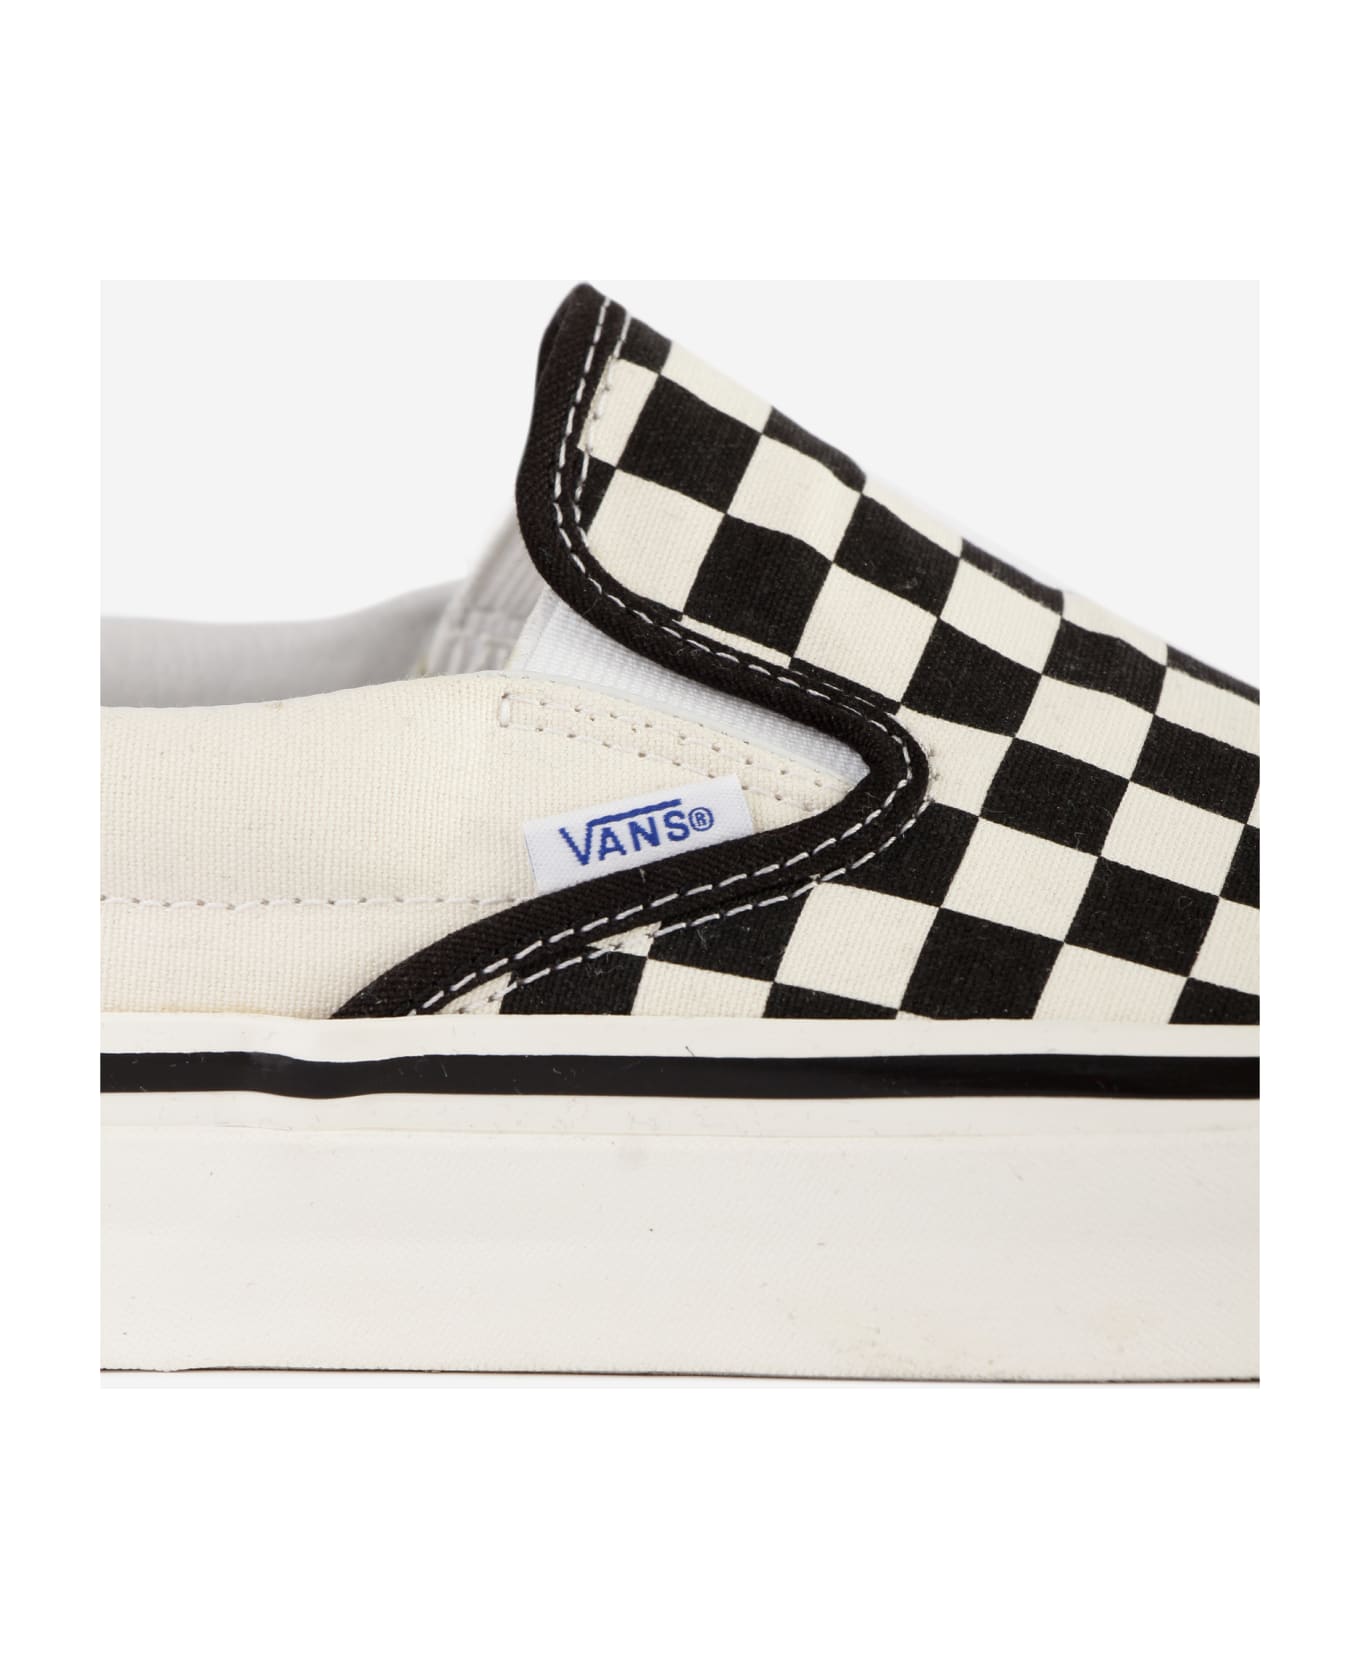 Vans Classic Slip-on Sneakers - Checker